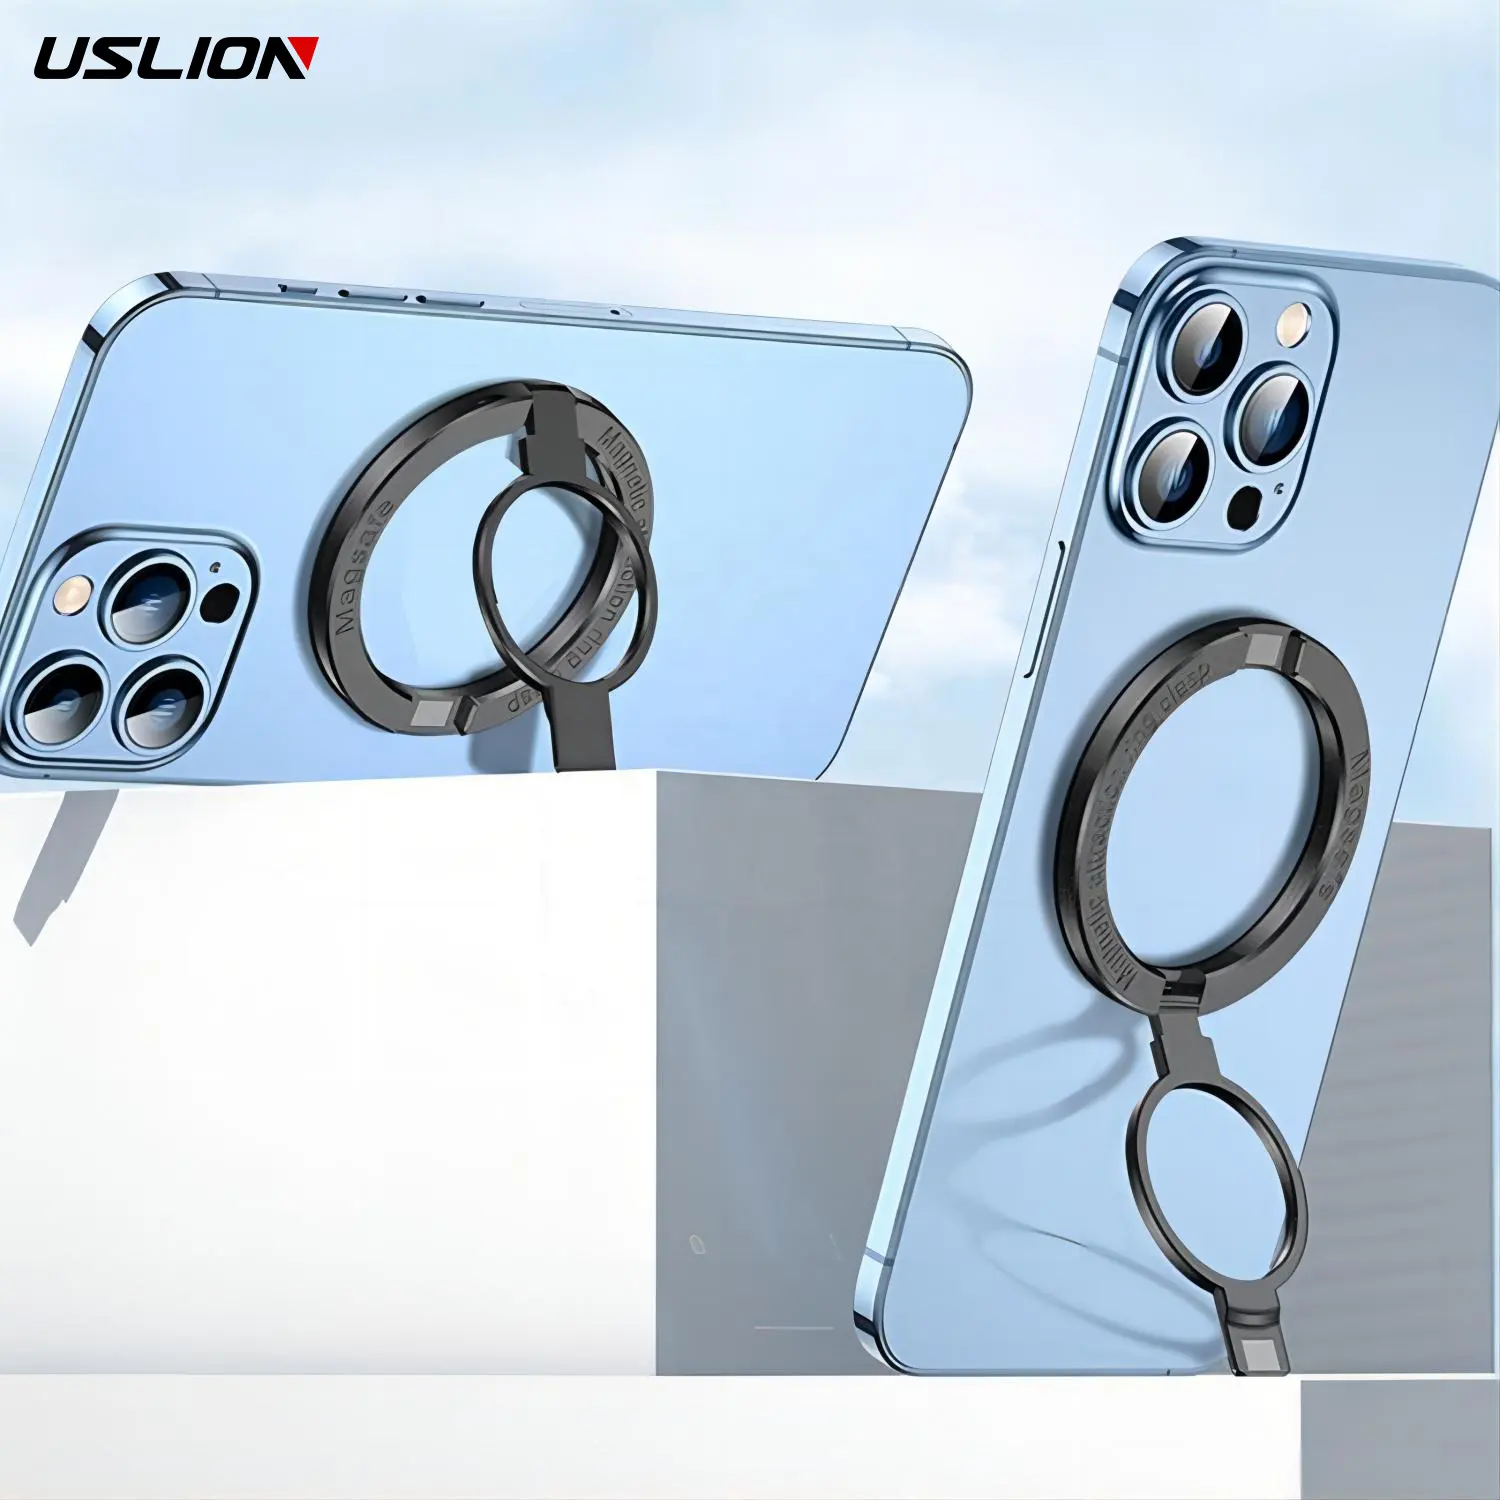 USLION Removable Finger Rings Grip Magnetic Smart Phone Holder Magnetic 360 Degree Rotation Mount Stand